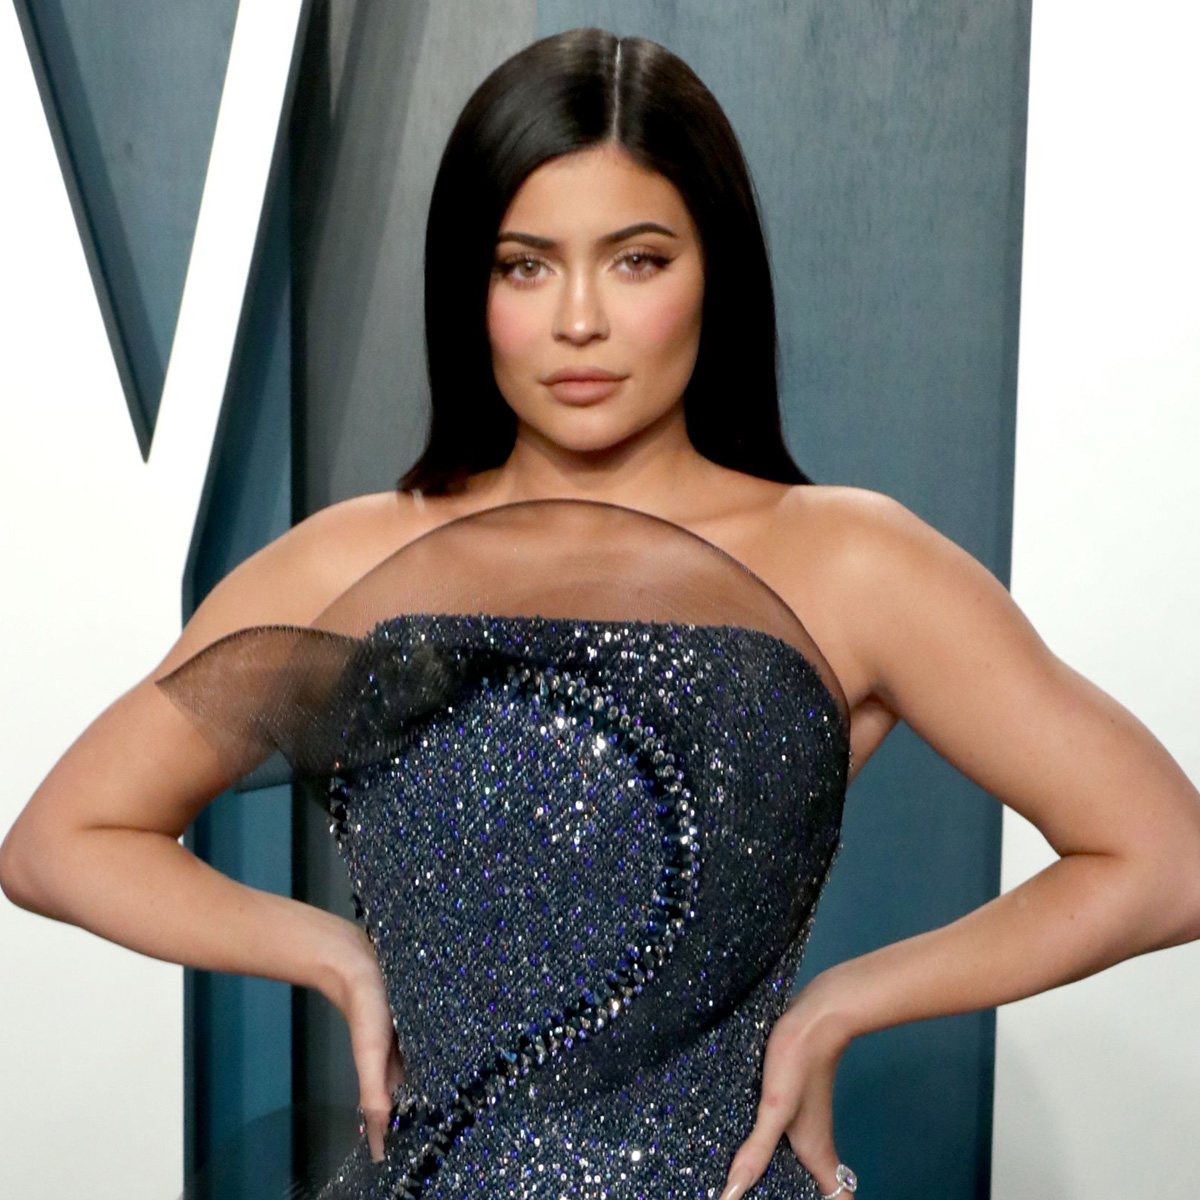 Kylie Jenner and her impressive evolution on the red carpet